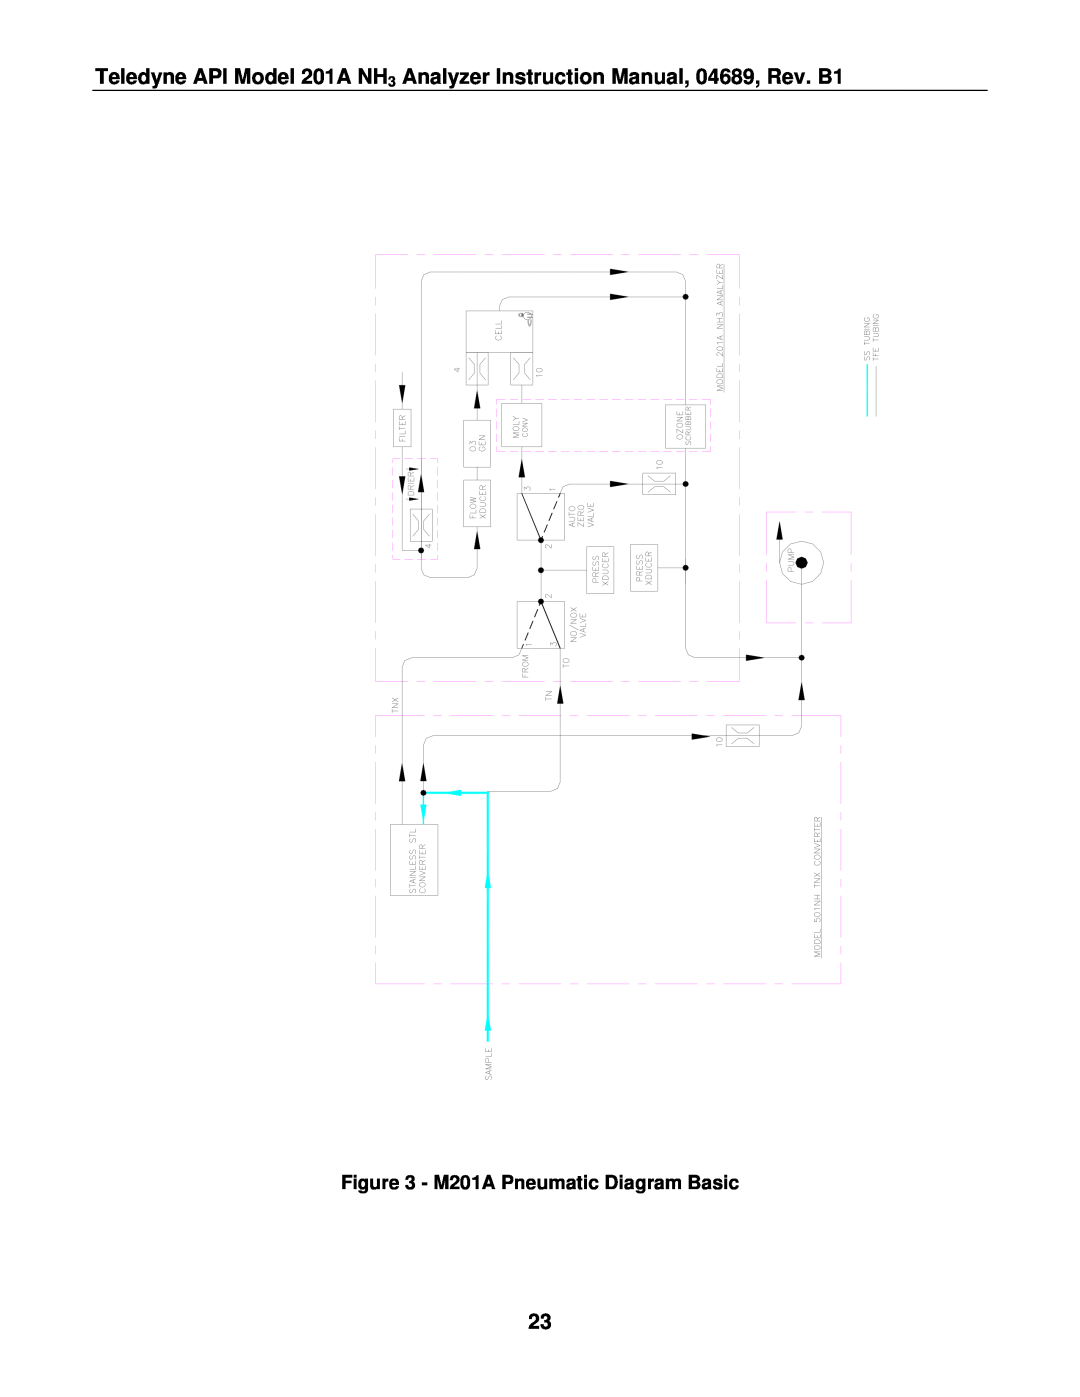 Teledyne manual M201A Pneumatic Diagram Basic 